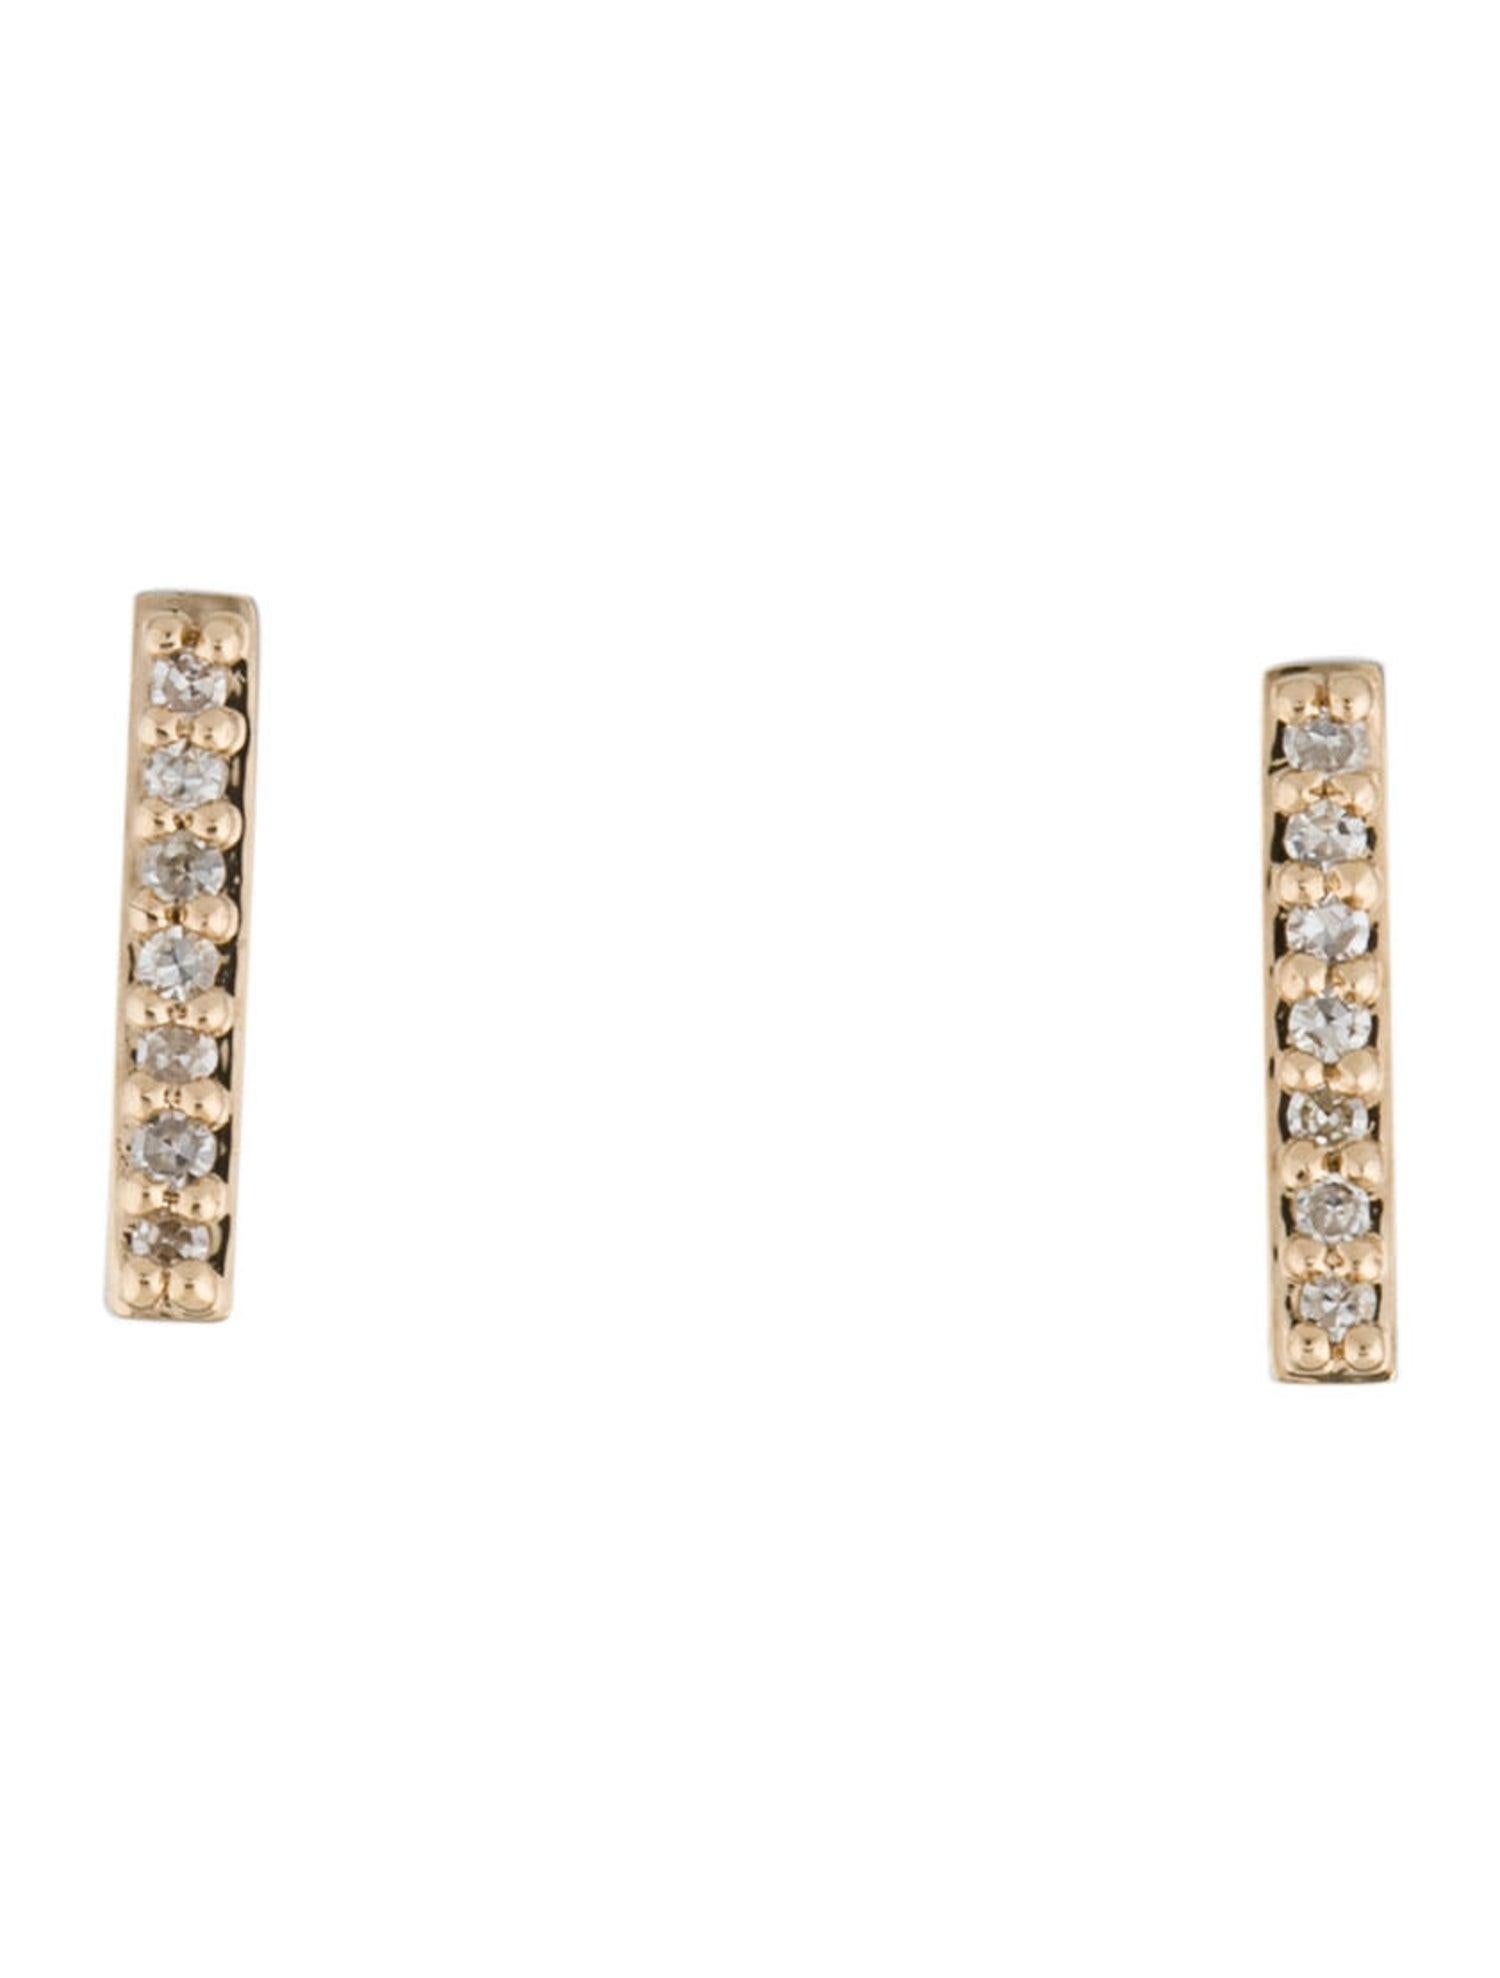 Round Cut 14k Yellow Gold 0.07 Carat Diamond Bar Earrings For Sale